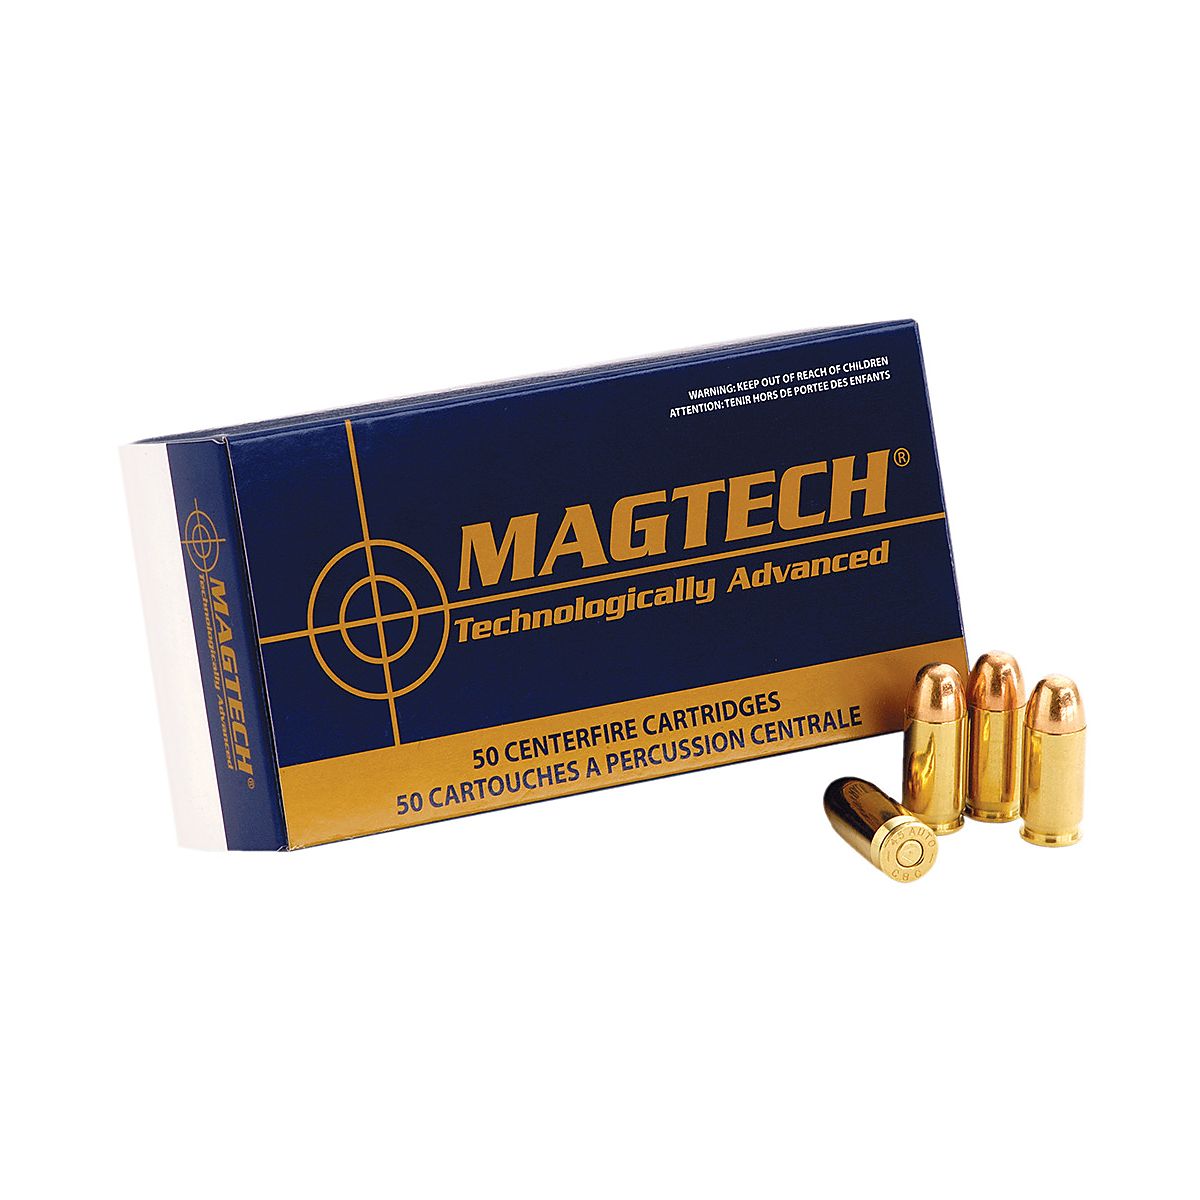 Magtech, Sport Shooting, 9MM, 124 Grain, Full Metal Case, 50 Round Box